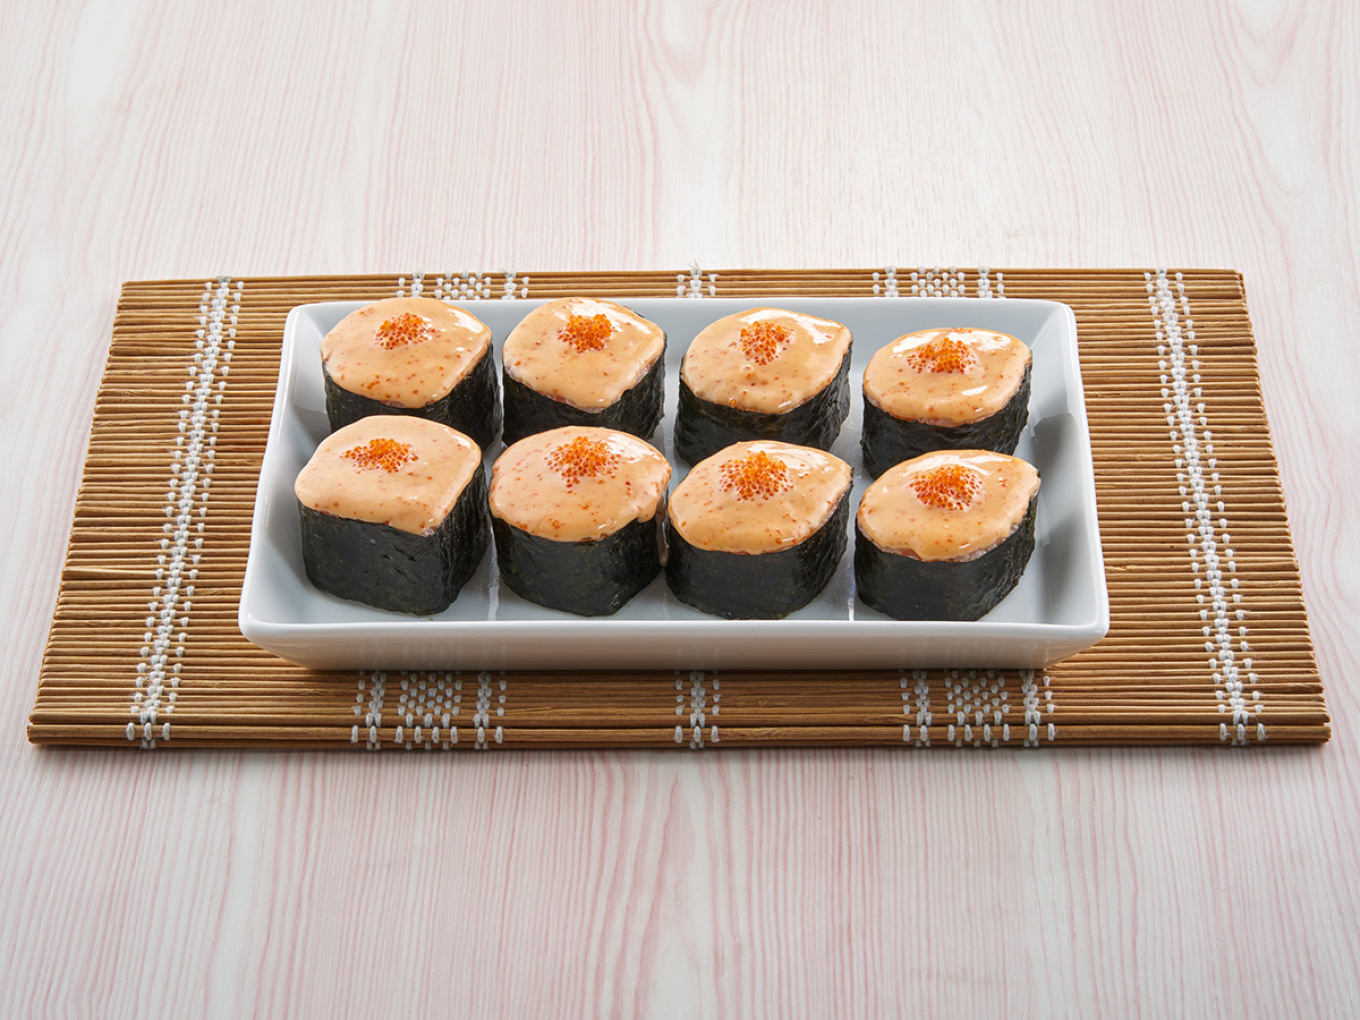 KEWPIE-style Mentai Mayo Sushi Roll